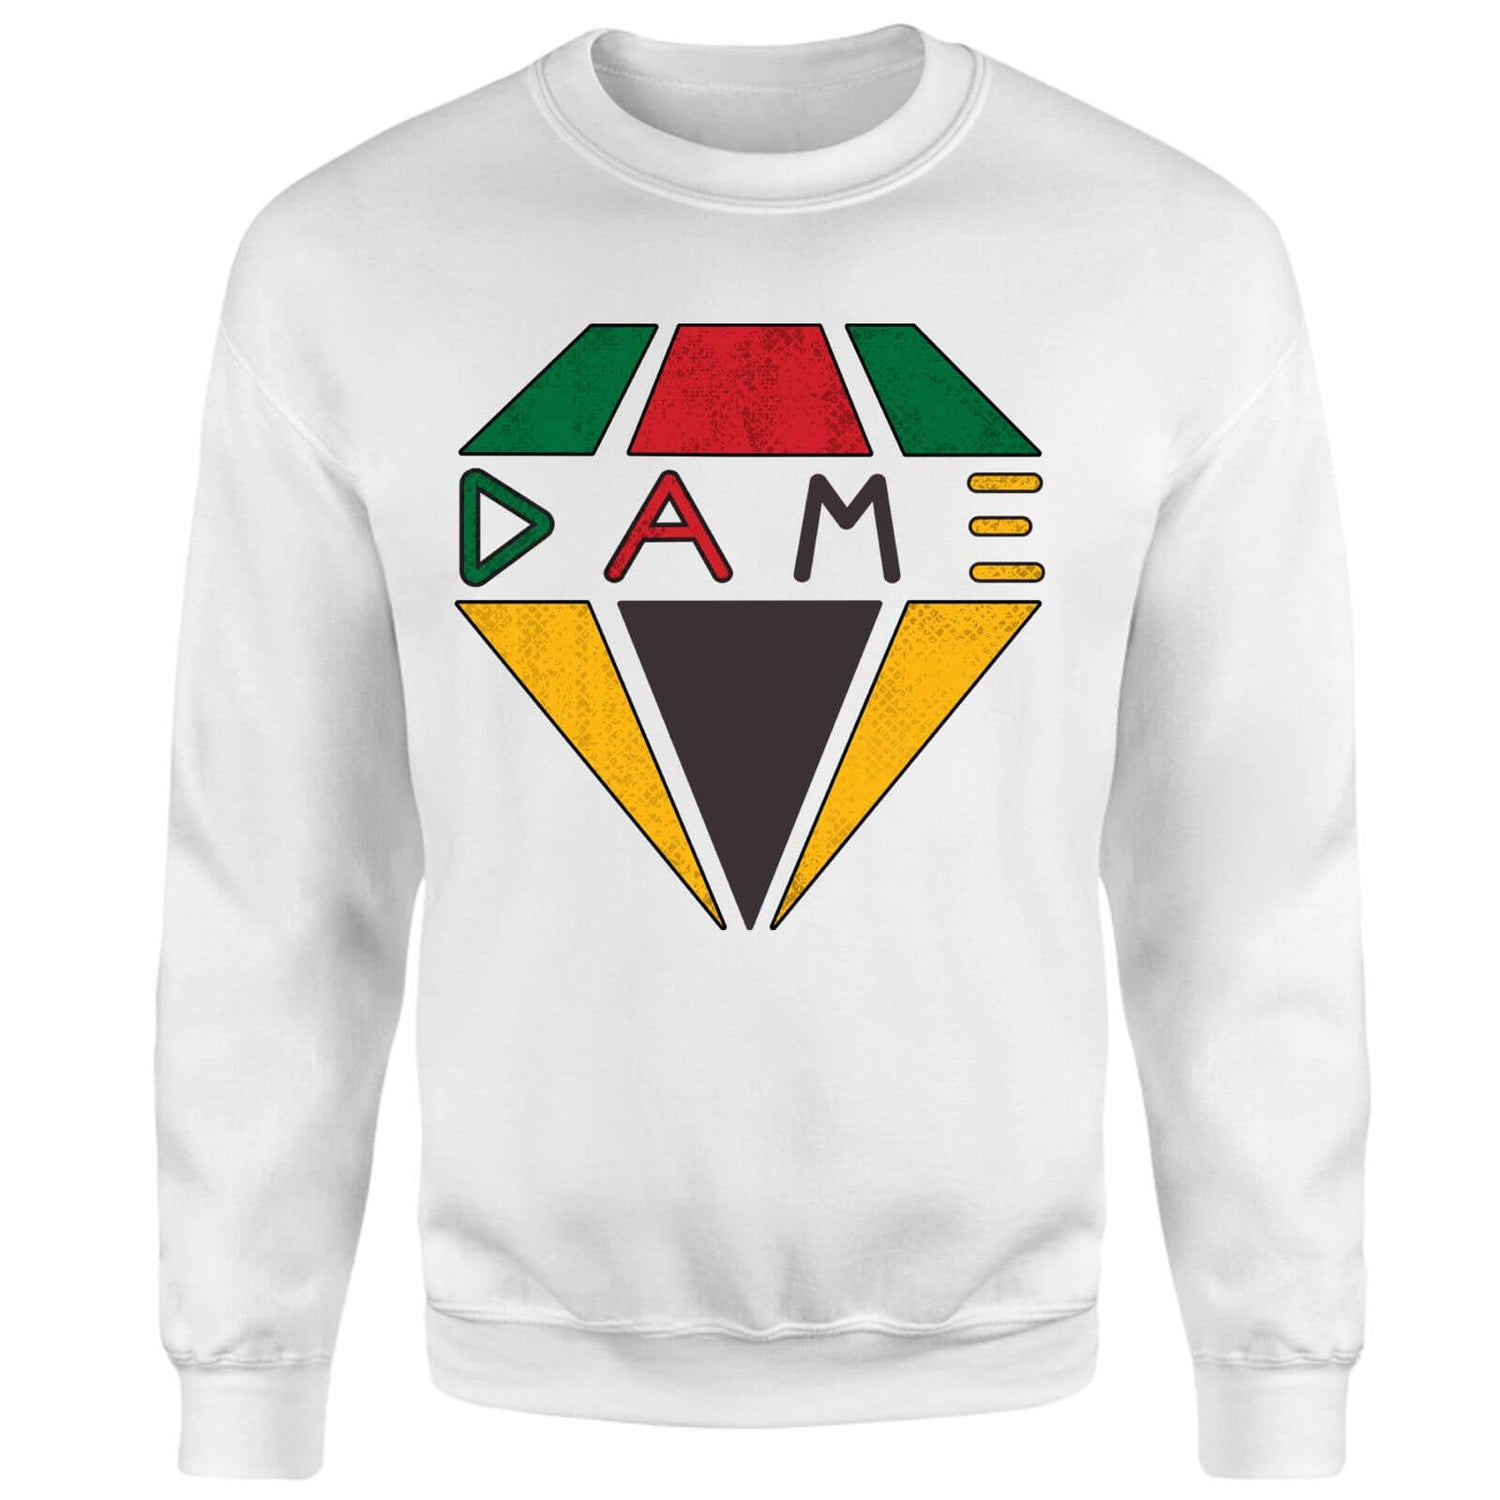 Creed DAME Diamond Logo Sweatshirt - White - XS